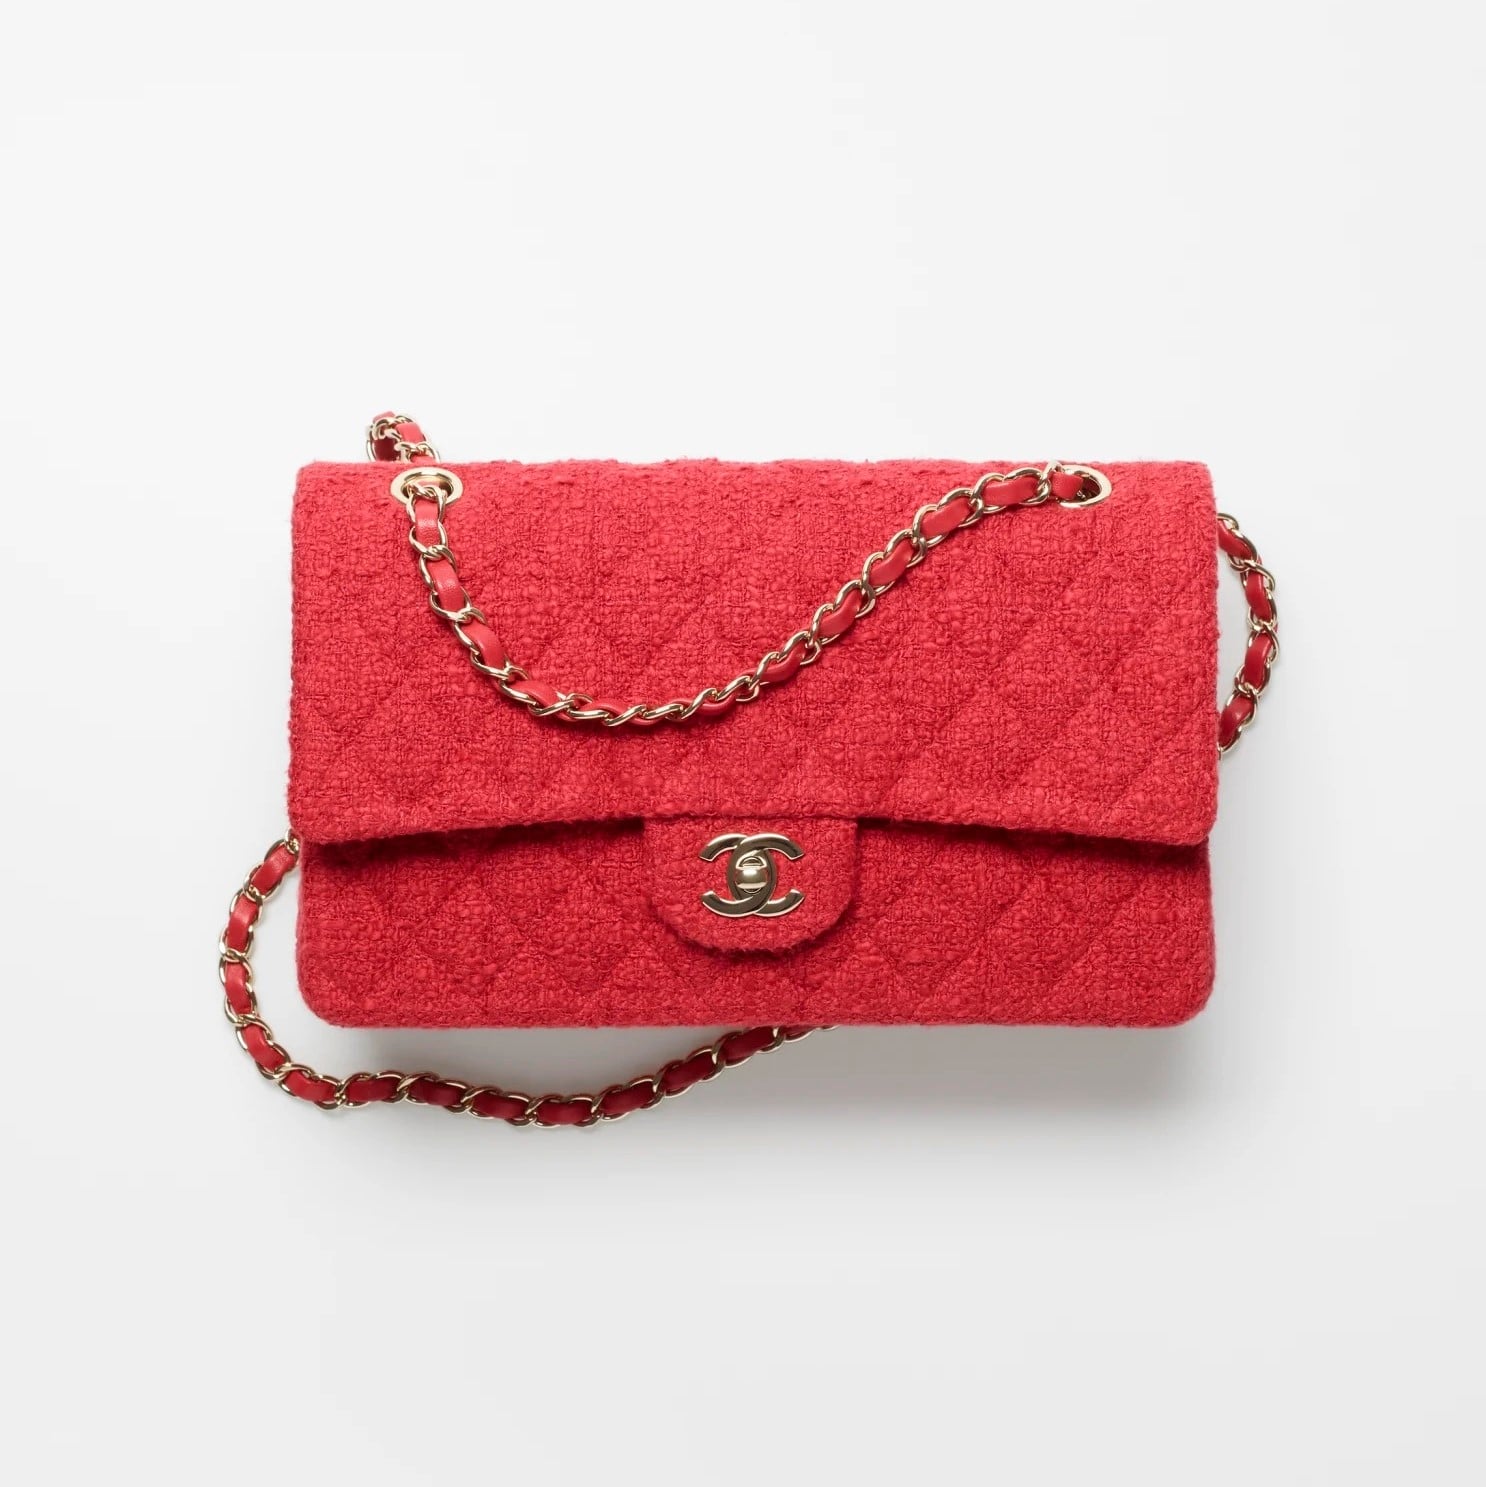 Chanel Red Tweed Classic Handbag